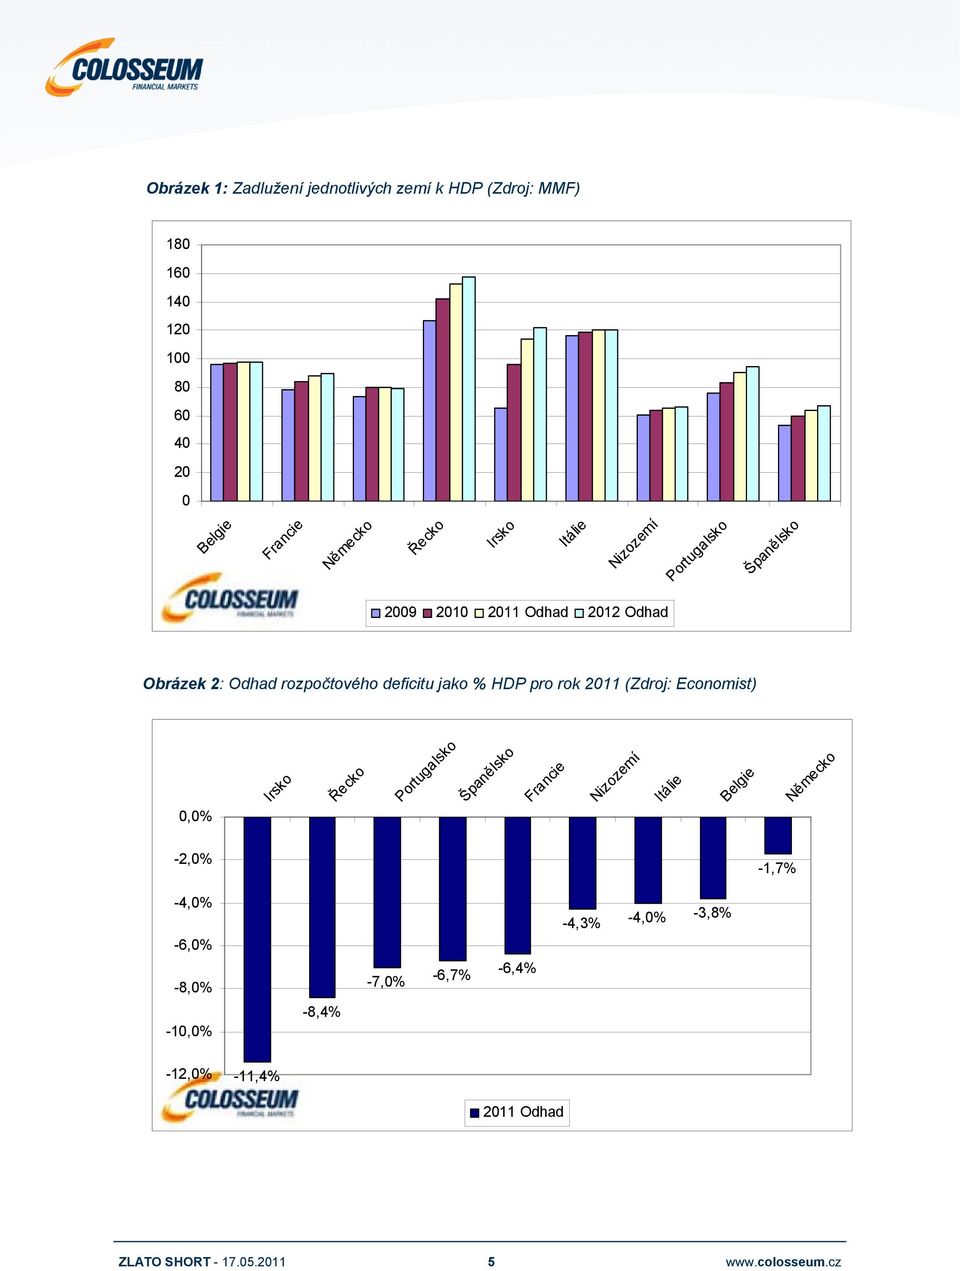 deficitu jako % HDP pro rok 2011 (Zdroj: Economist) 0,0% Irsko Řecko Portugalsko Španělsko Francie Nizozemí Itálie